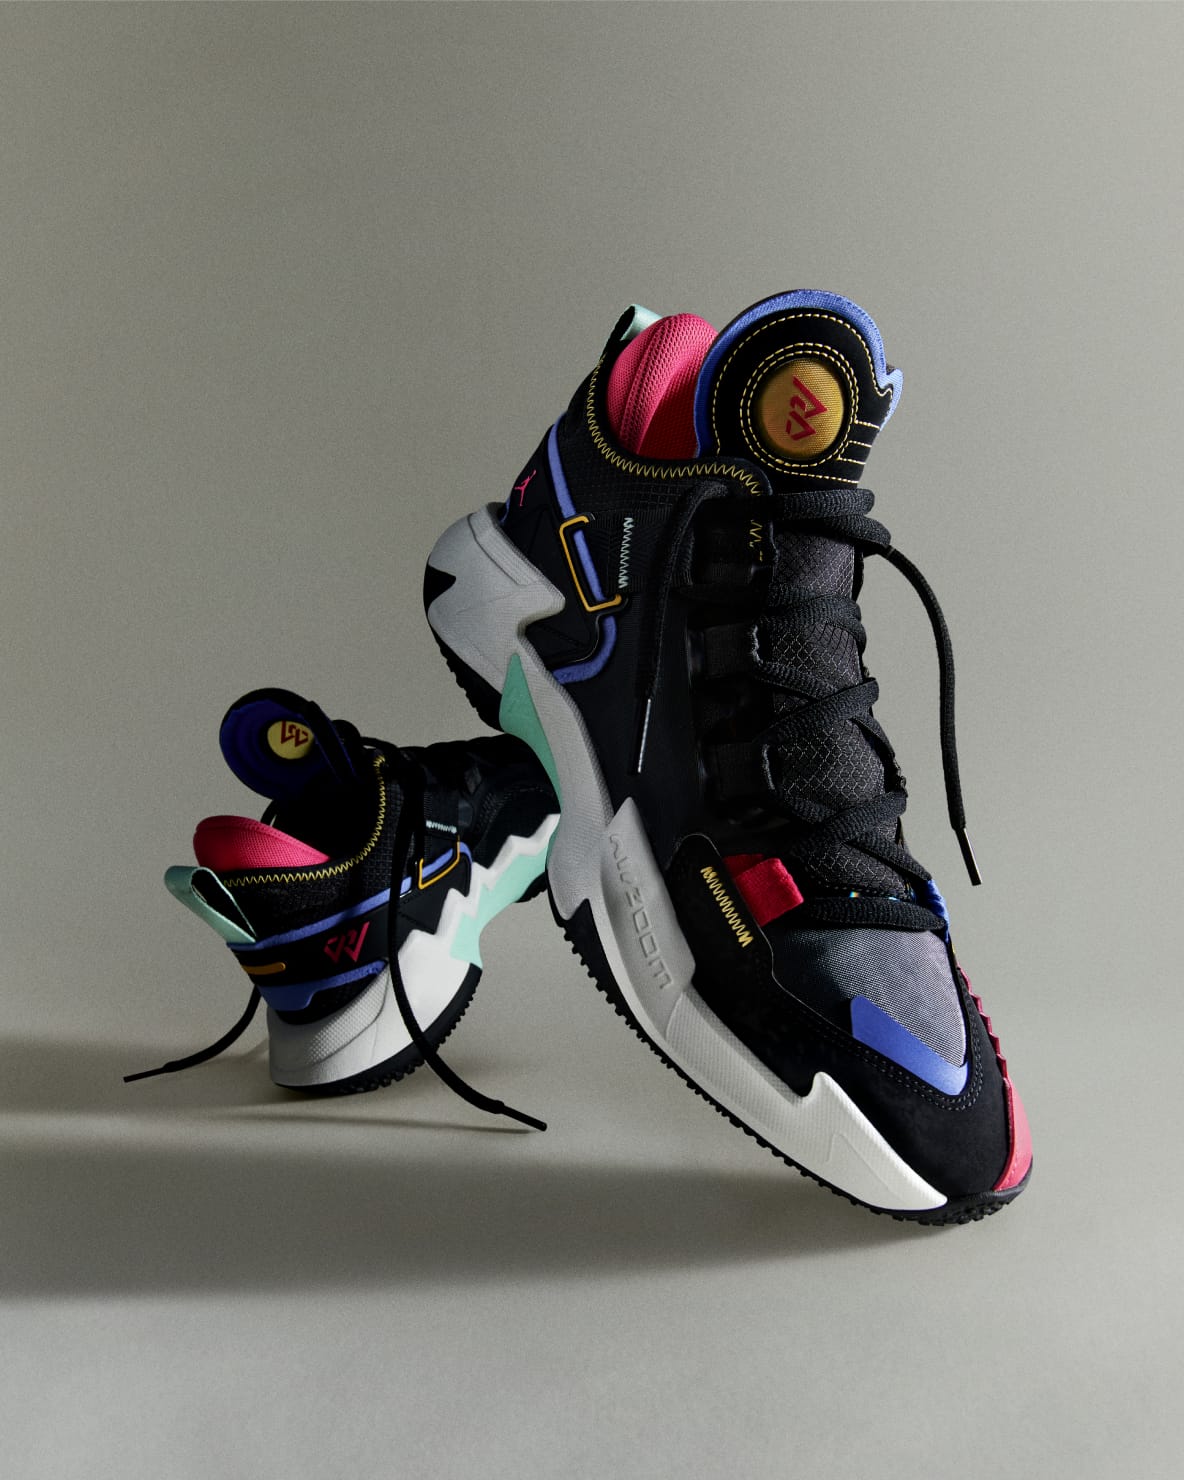 rainbow nike jordan shoes | Welcome to Jordan Basketball. Nike.com